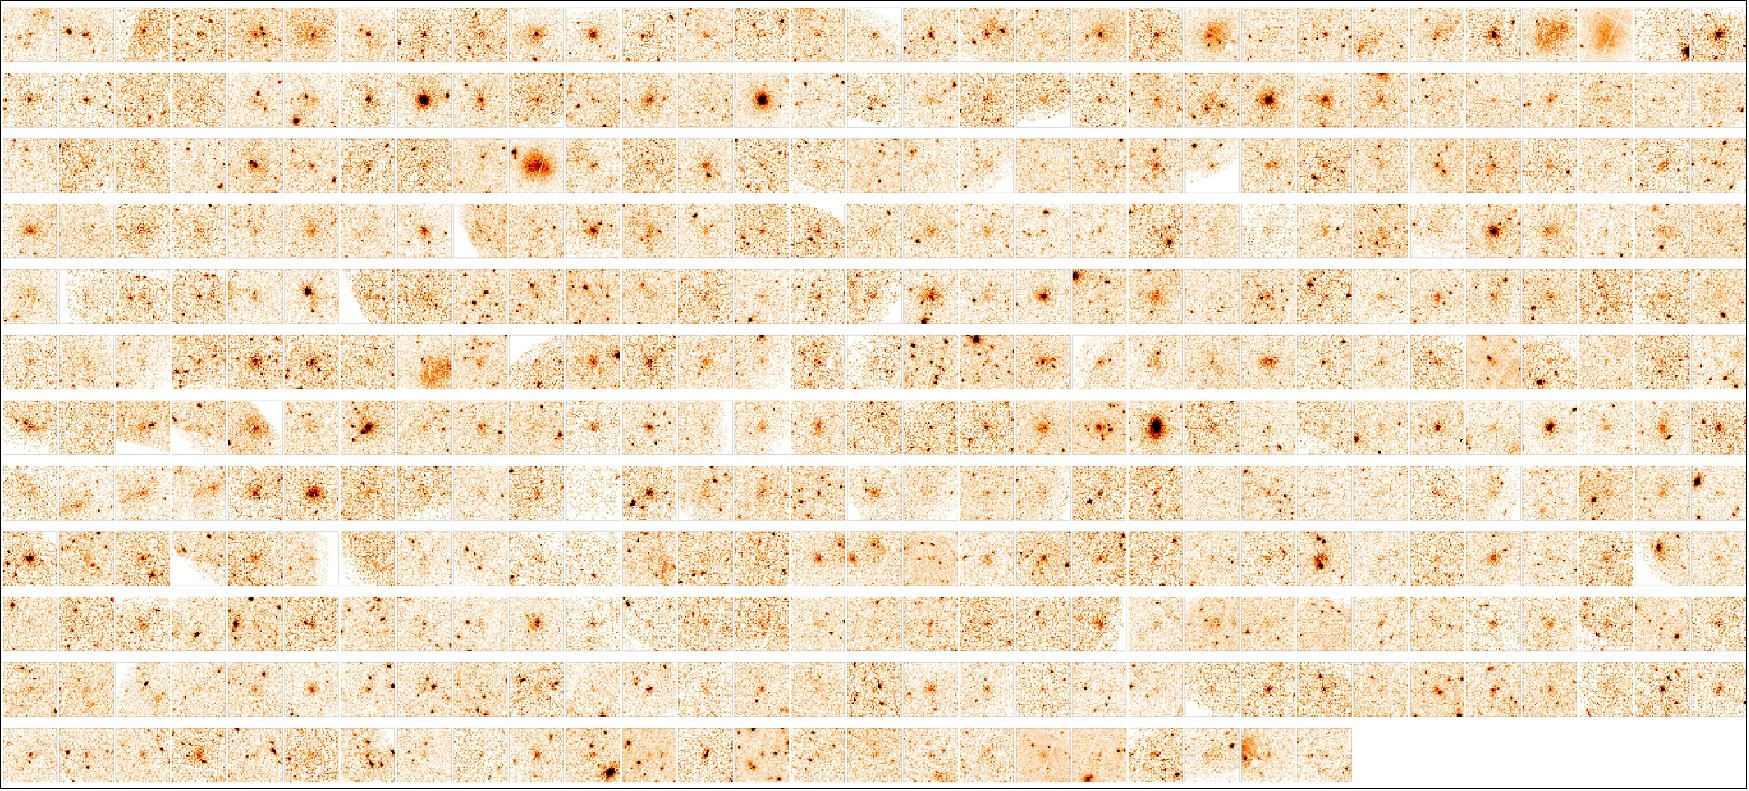 Figure 72: The 365 galaxy clusters of the XXL Survey – X-ray view (image credit: ESA/XMM-Newton/XXL Survey)